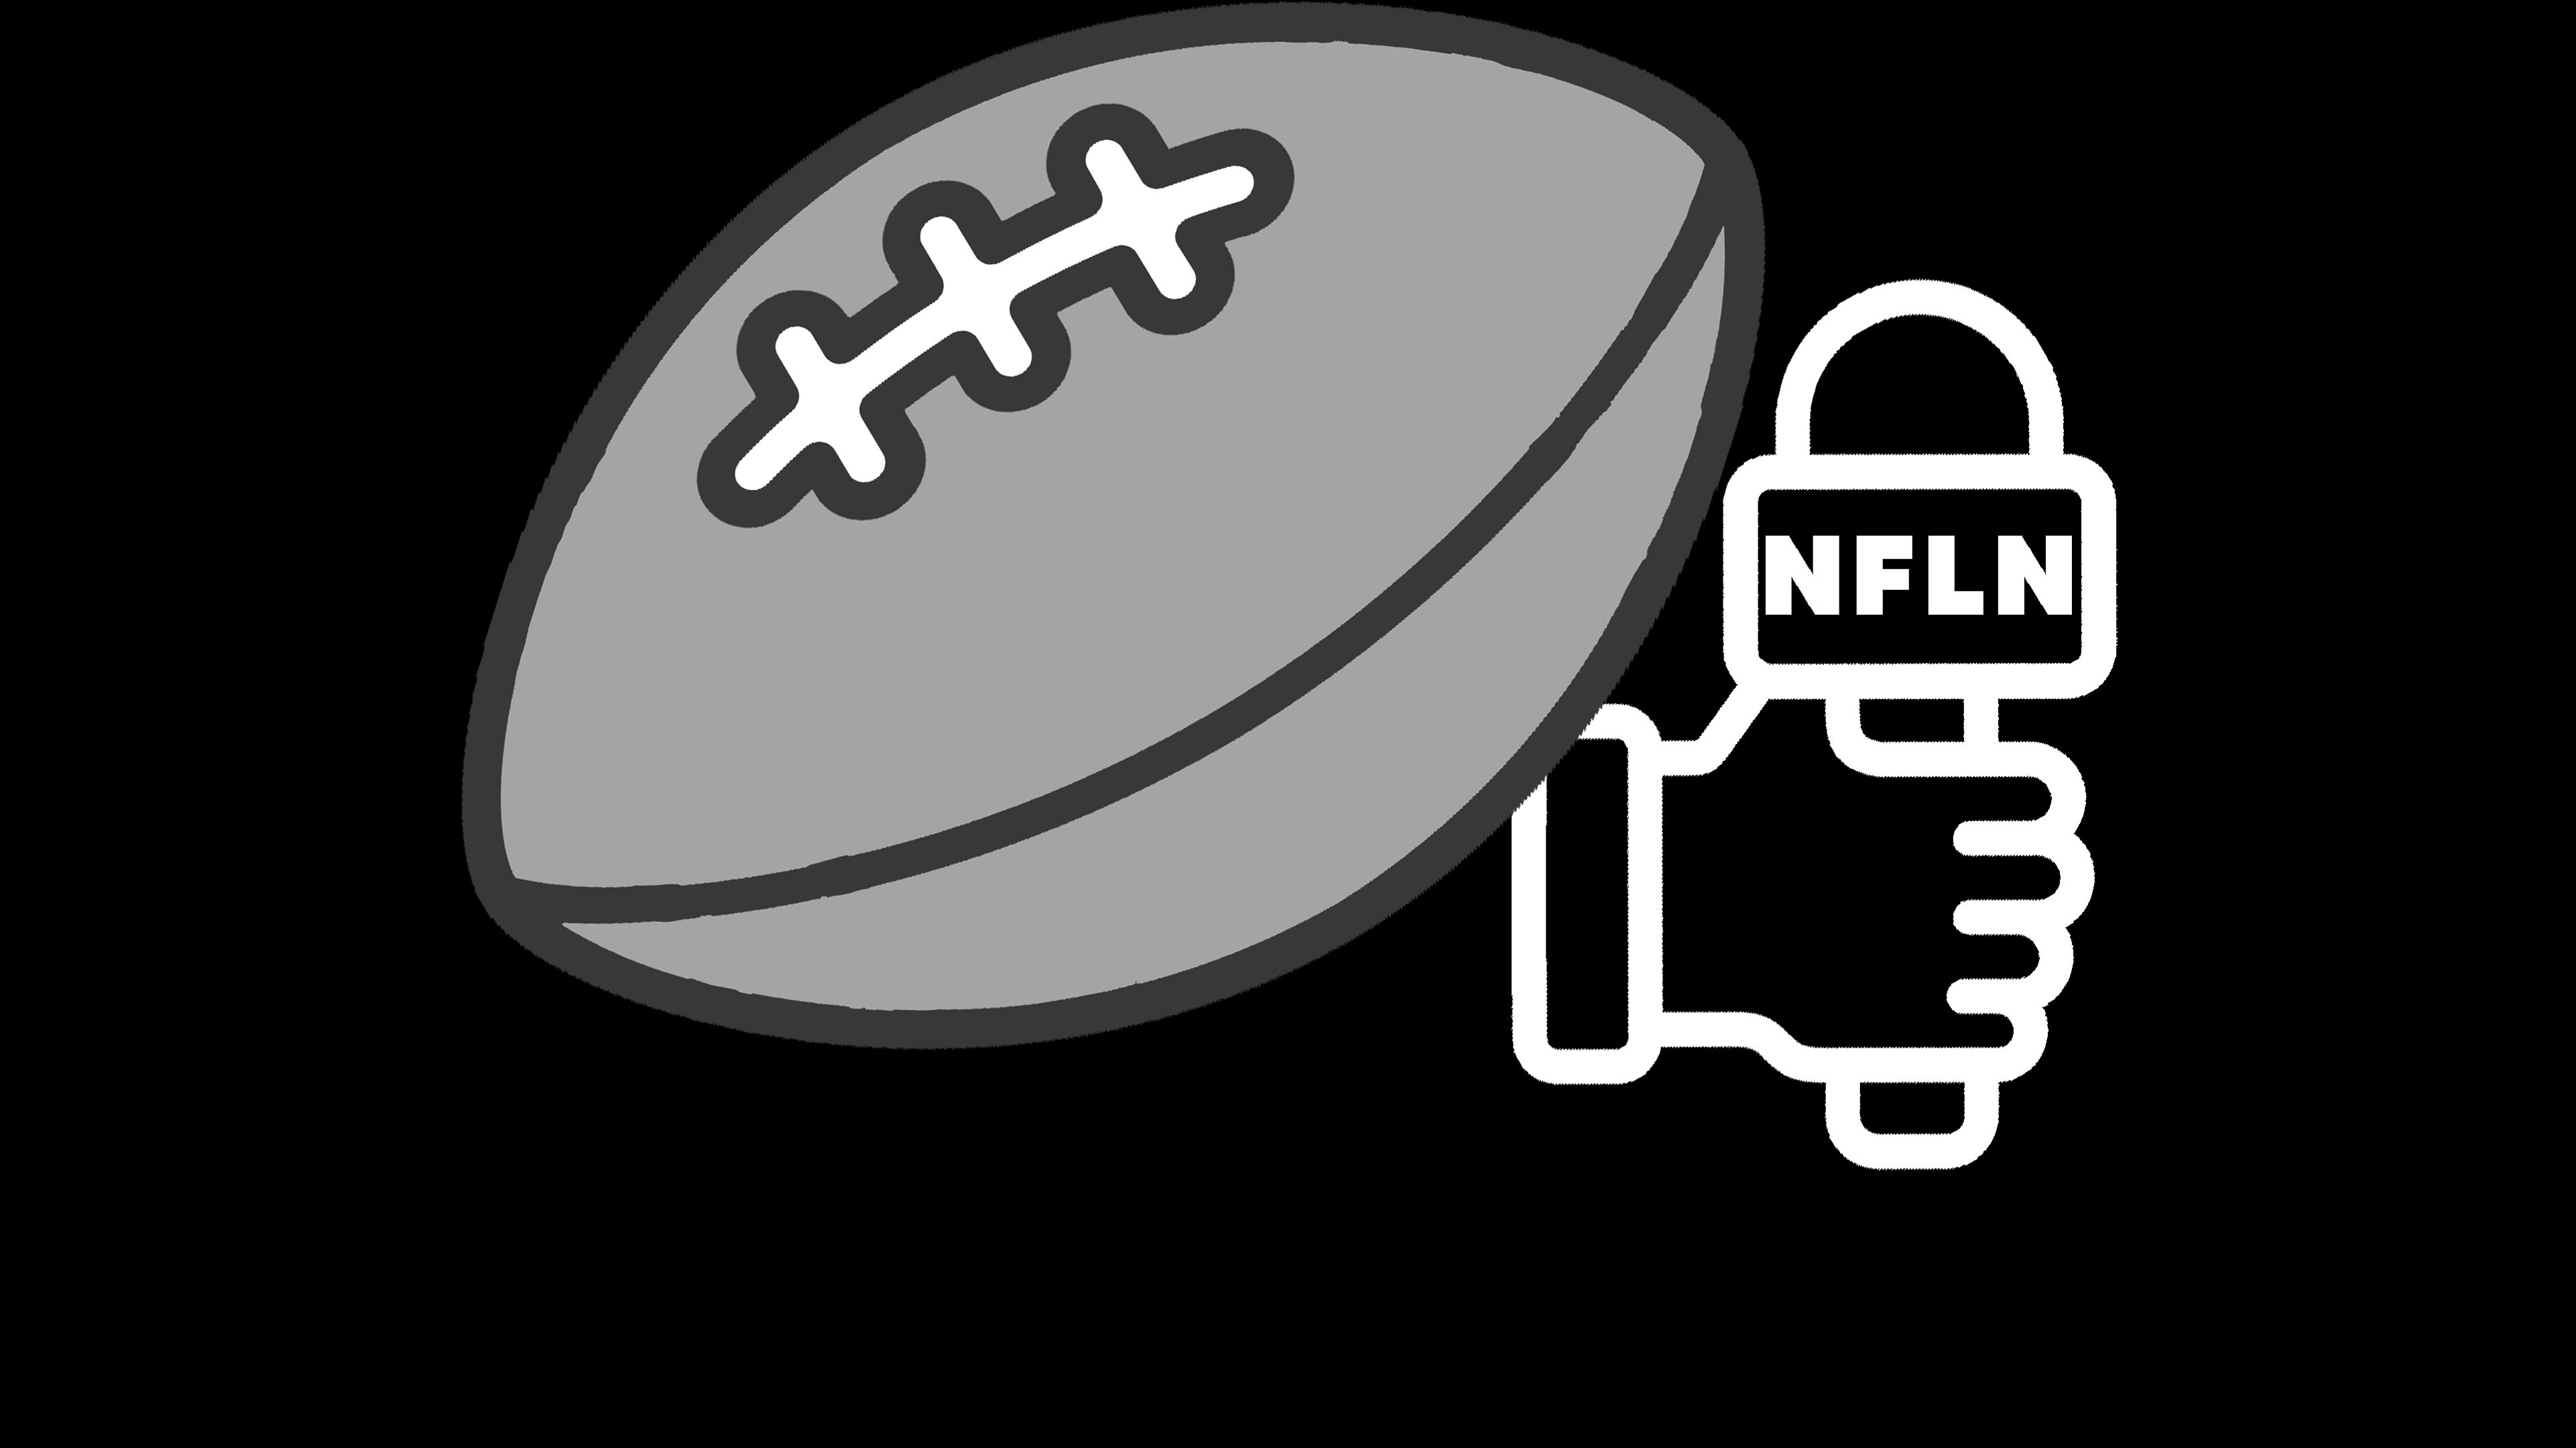 NFL RedZone NFL Network NFL